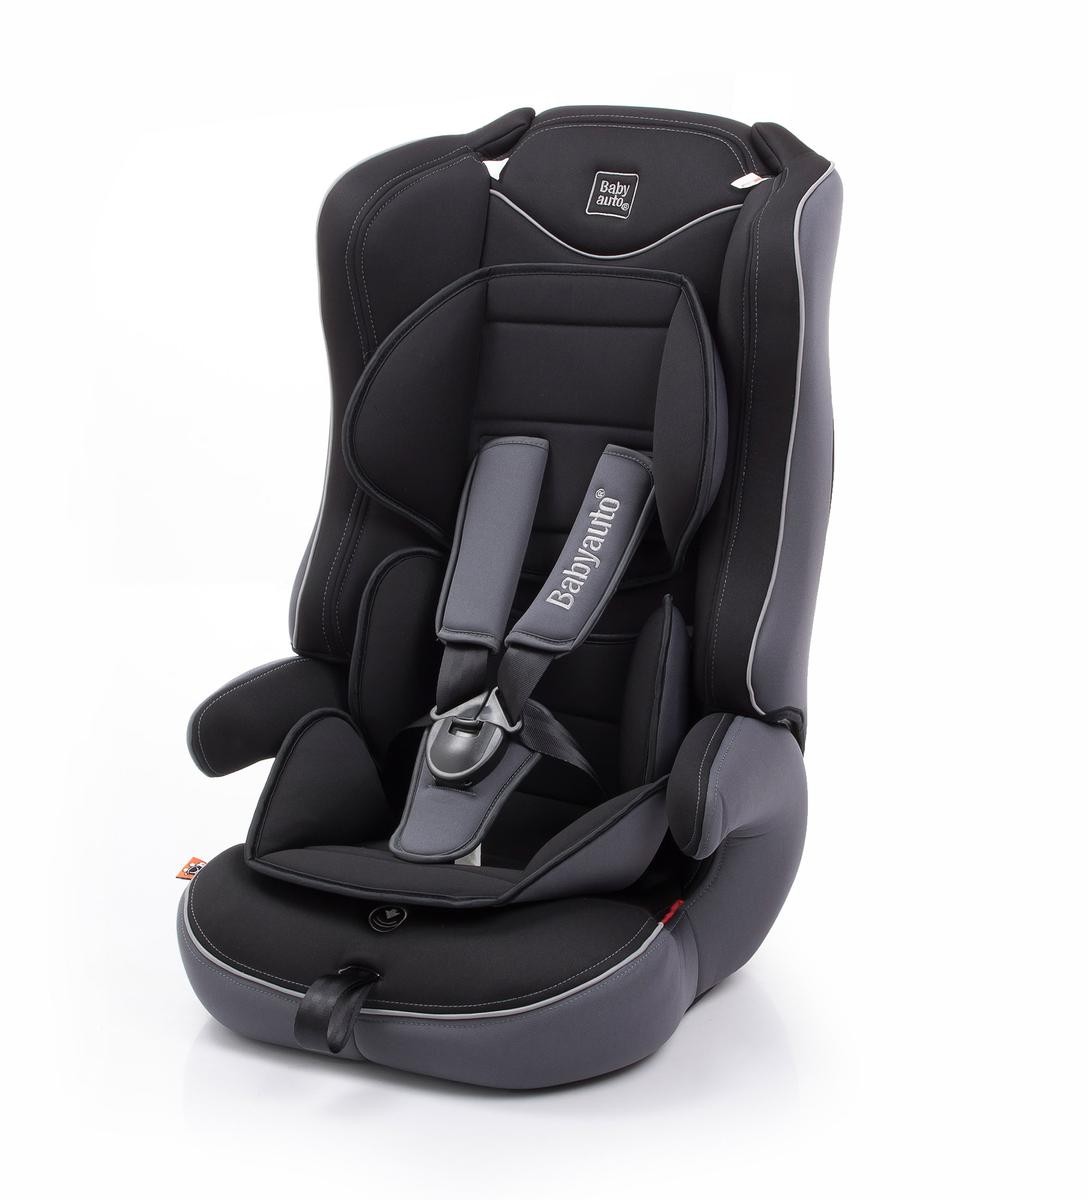 Children's car seat anthracite/black Babyauto Nico 8436015313620